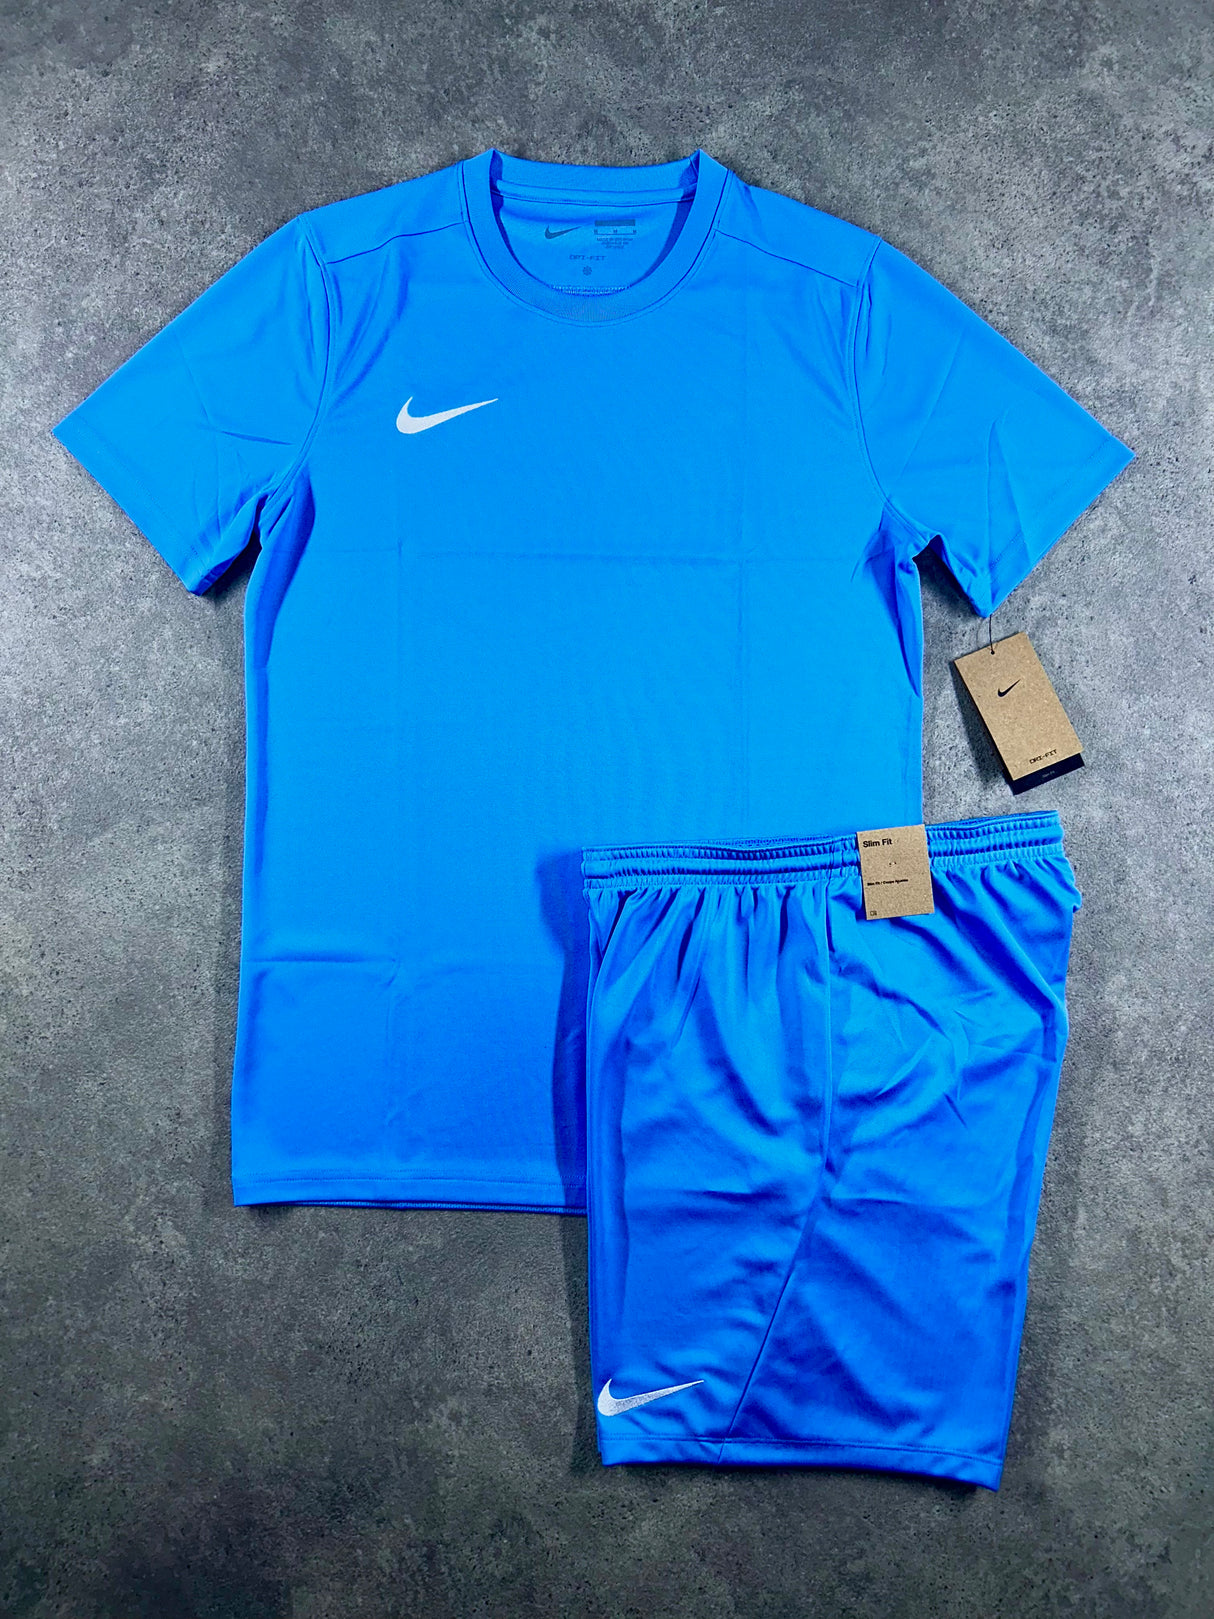 Nike - Dri Fit Set - Sky Blue